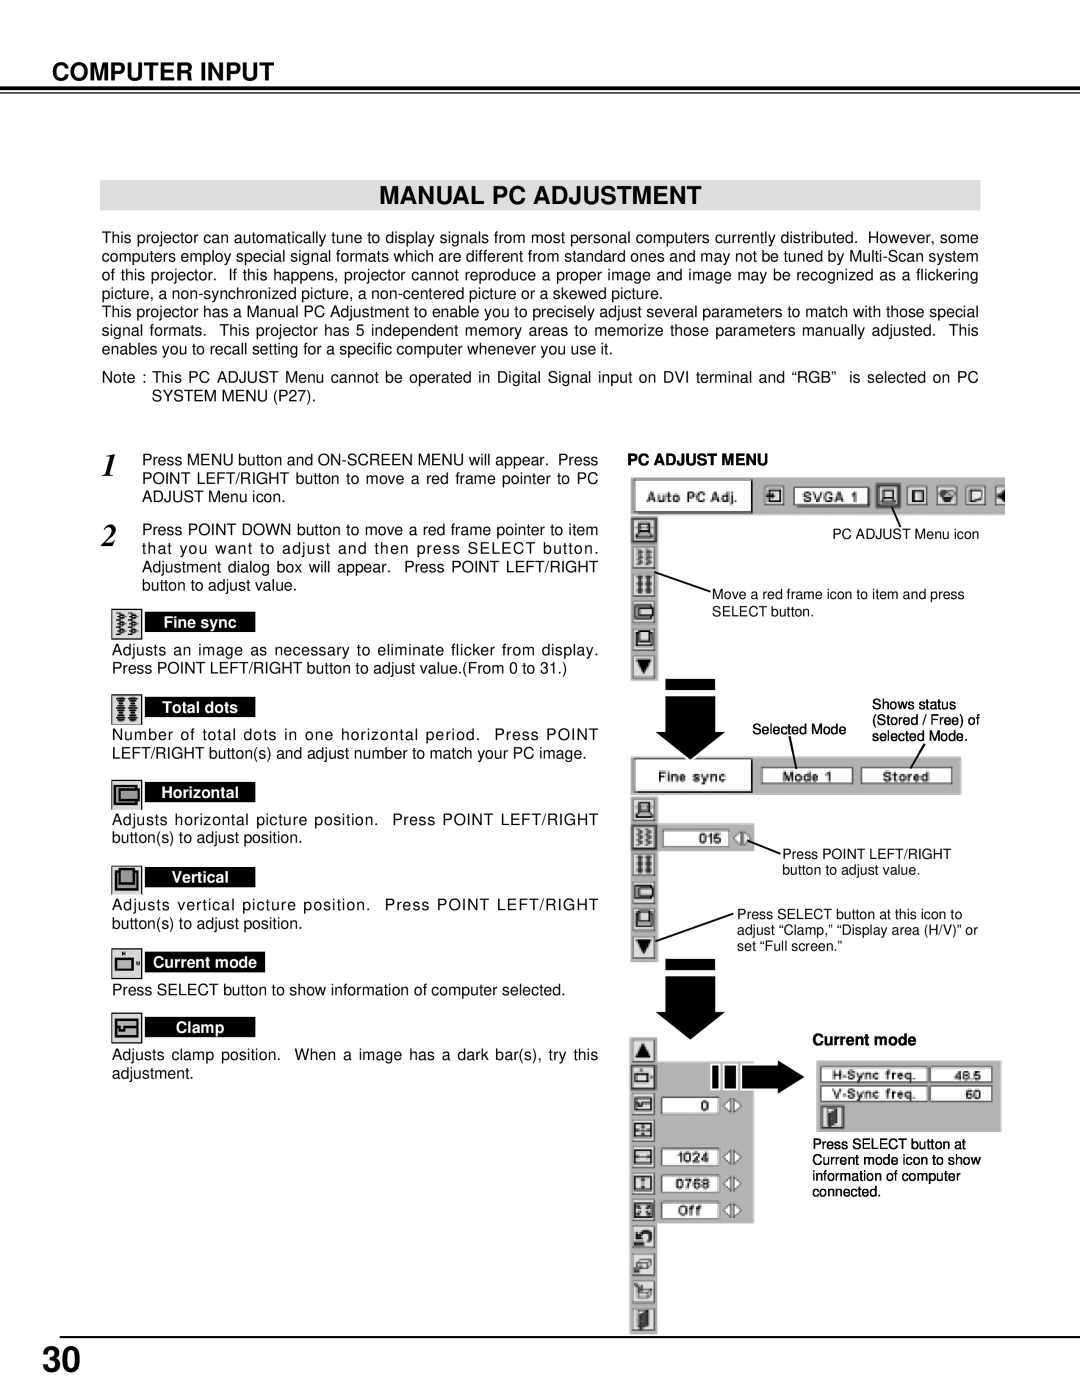 Eiki LC-UXT1 Computer Input Manual Pc Adjustment, Fine sync, Total dots, Horizontal, Vertical, Current mode, Clamp 